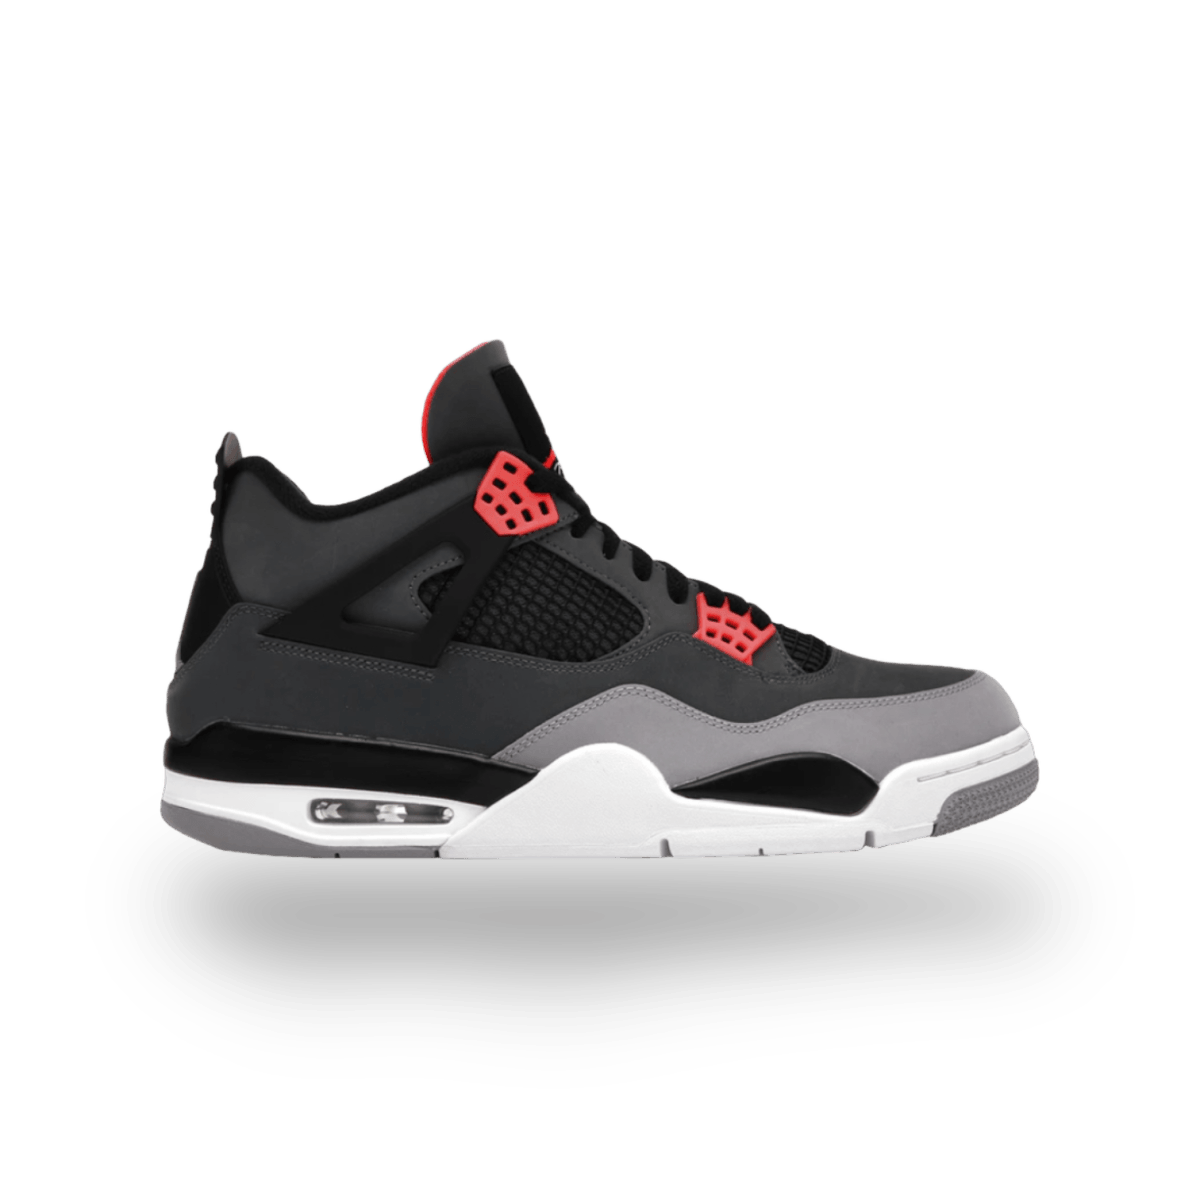 Jordan 4 Retro Infrared - Mid Sneaker - Jordan - Jawns on Fire